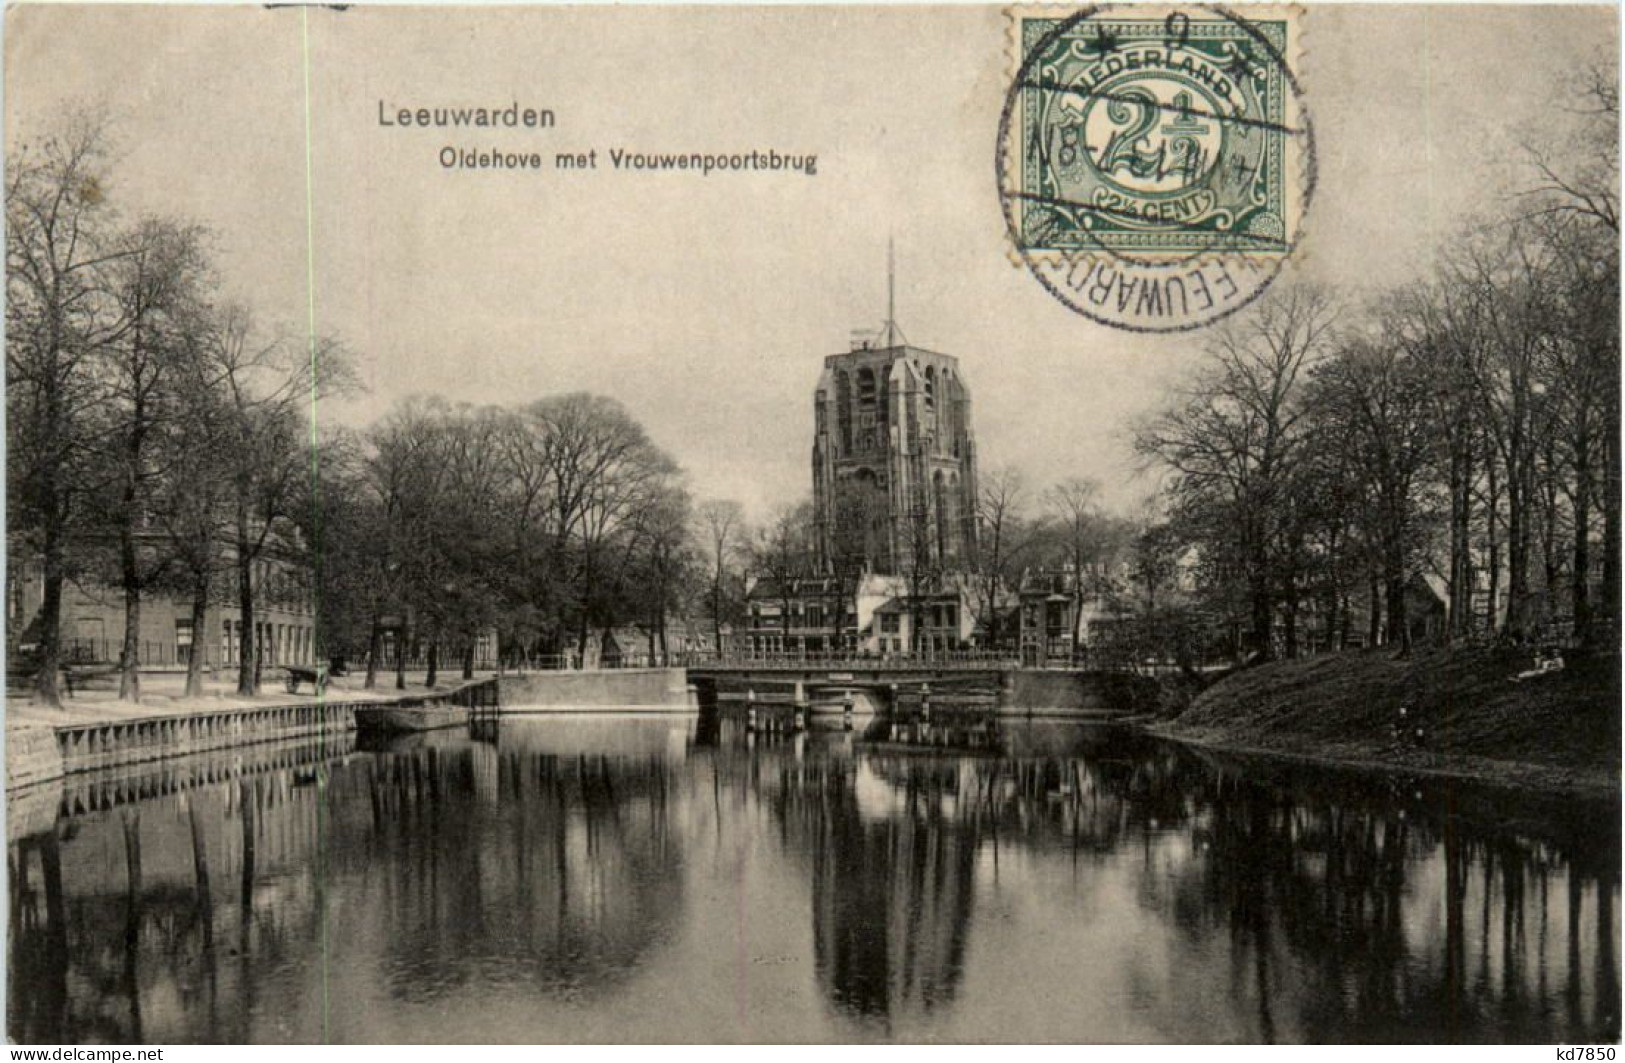 Leeuwarden - Oldshove - Leeuwarden